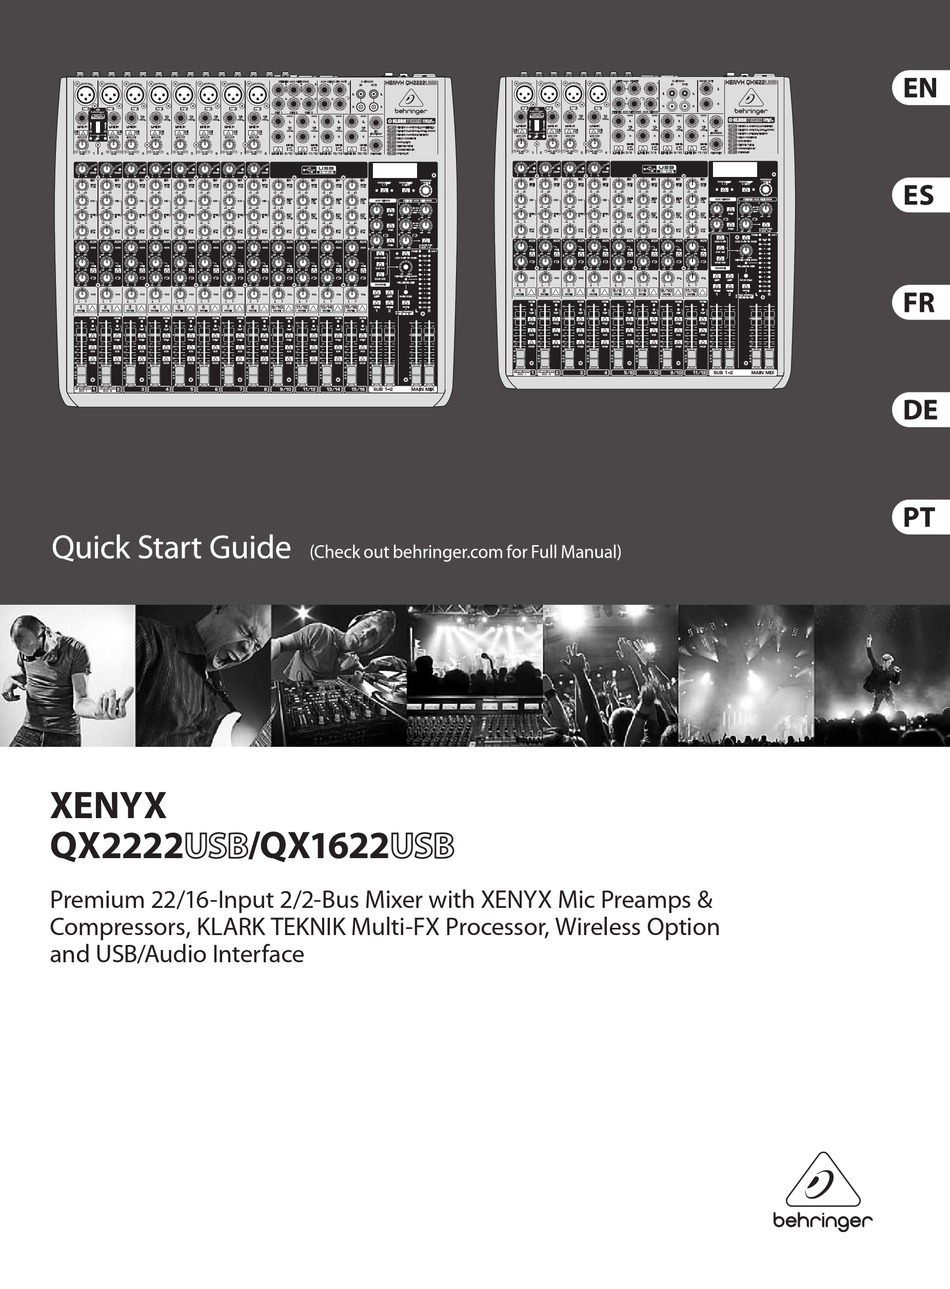 BEHRINGER QX1622USB Premium 16-Input 2/2-Bus Mixer with Xenyx Mic Preamps & Compressors Klark Teknik Multi FX Processor Black 